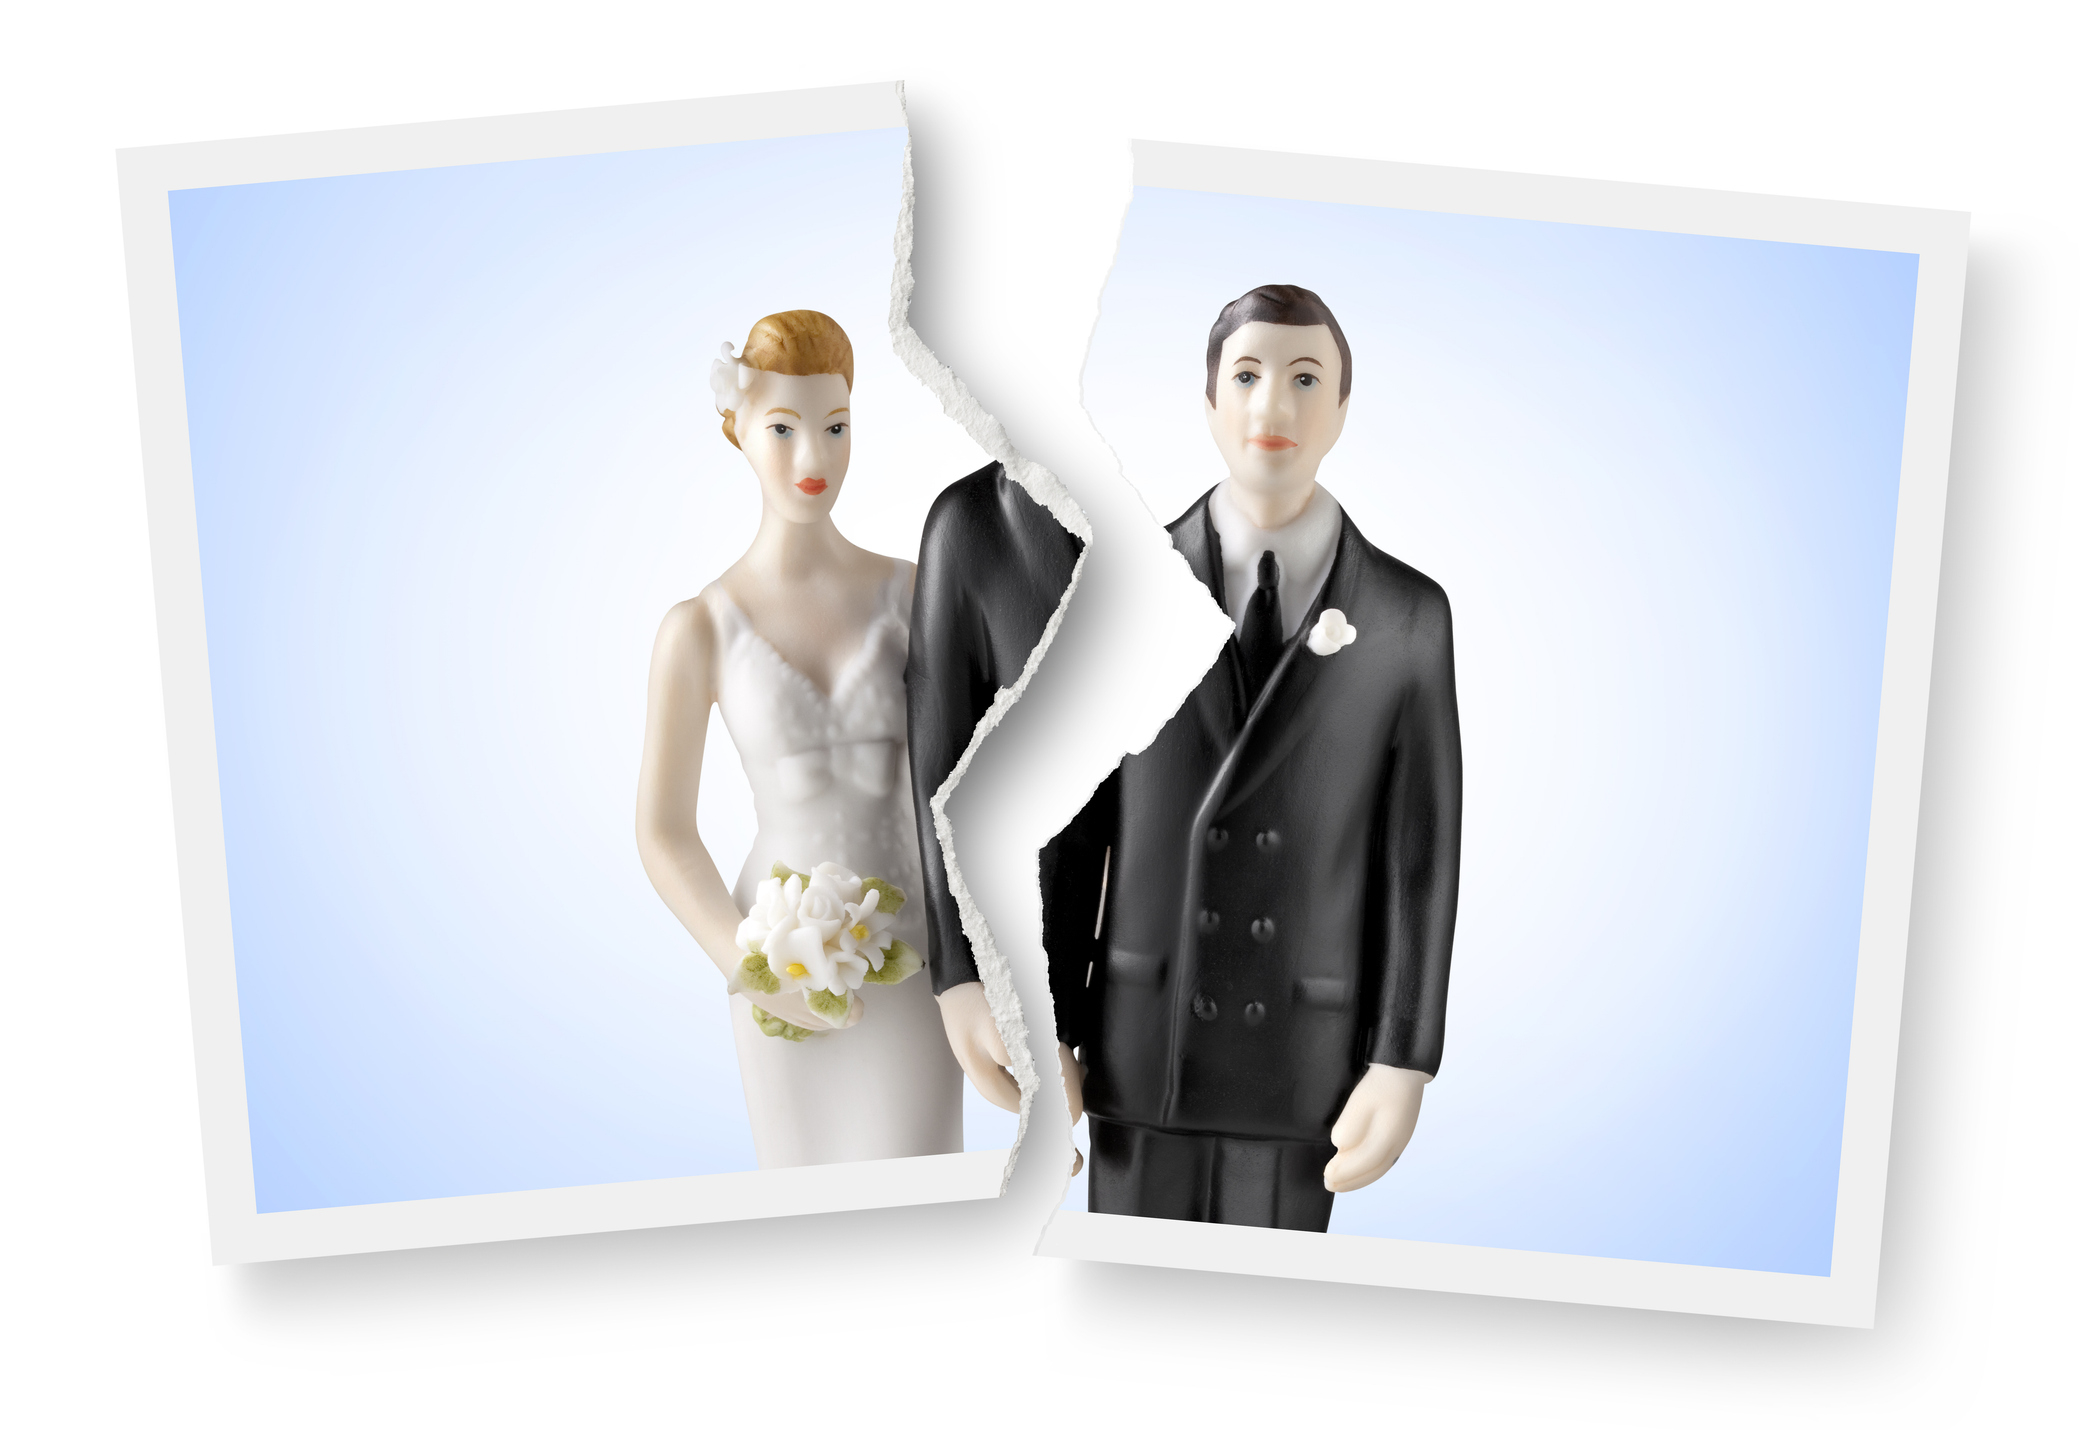 Torn photo of a bride and groom figurine, symbolizing divorce or marital separation